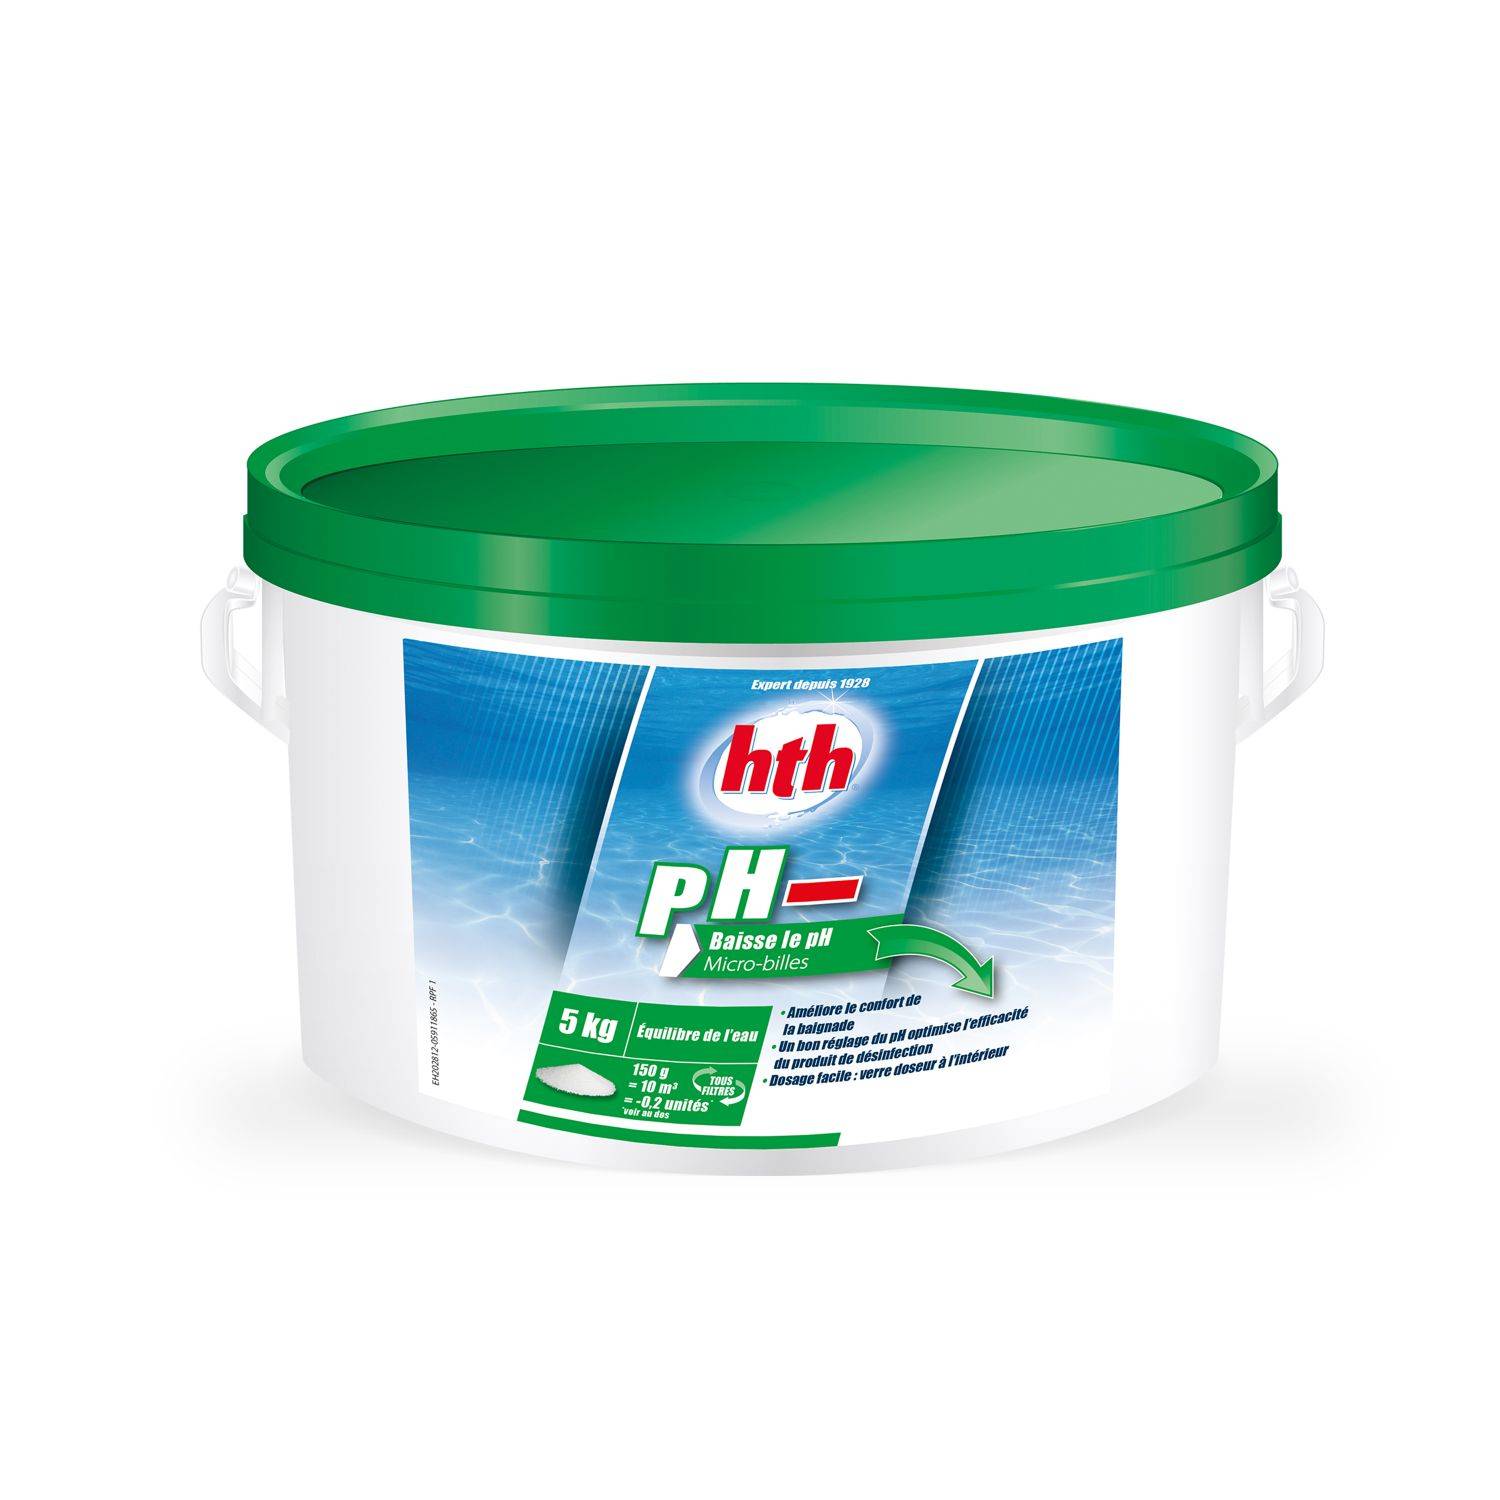 HTH pH MIN Alice's Garden HTH waterbehandeling - pH MIN microkorrels - 5,4 kg